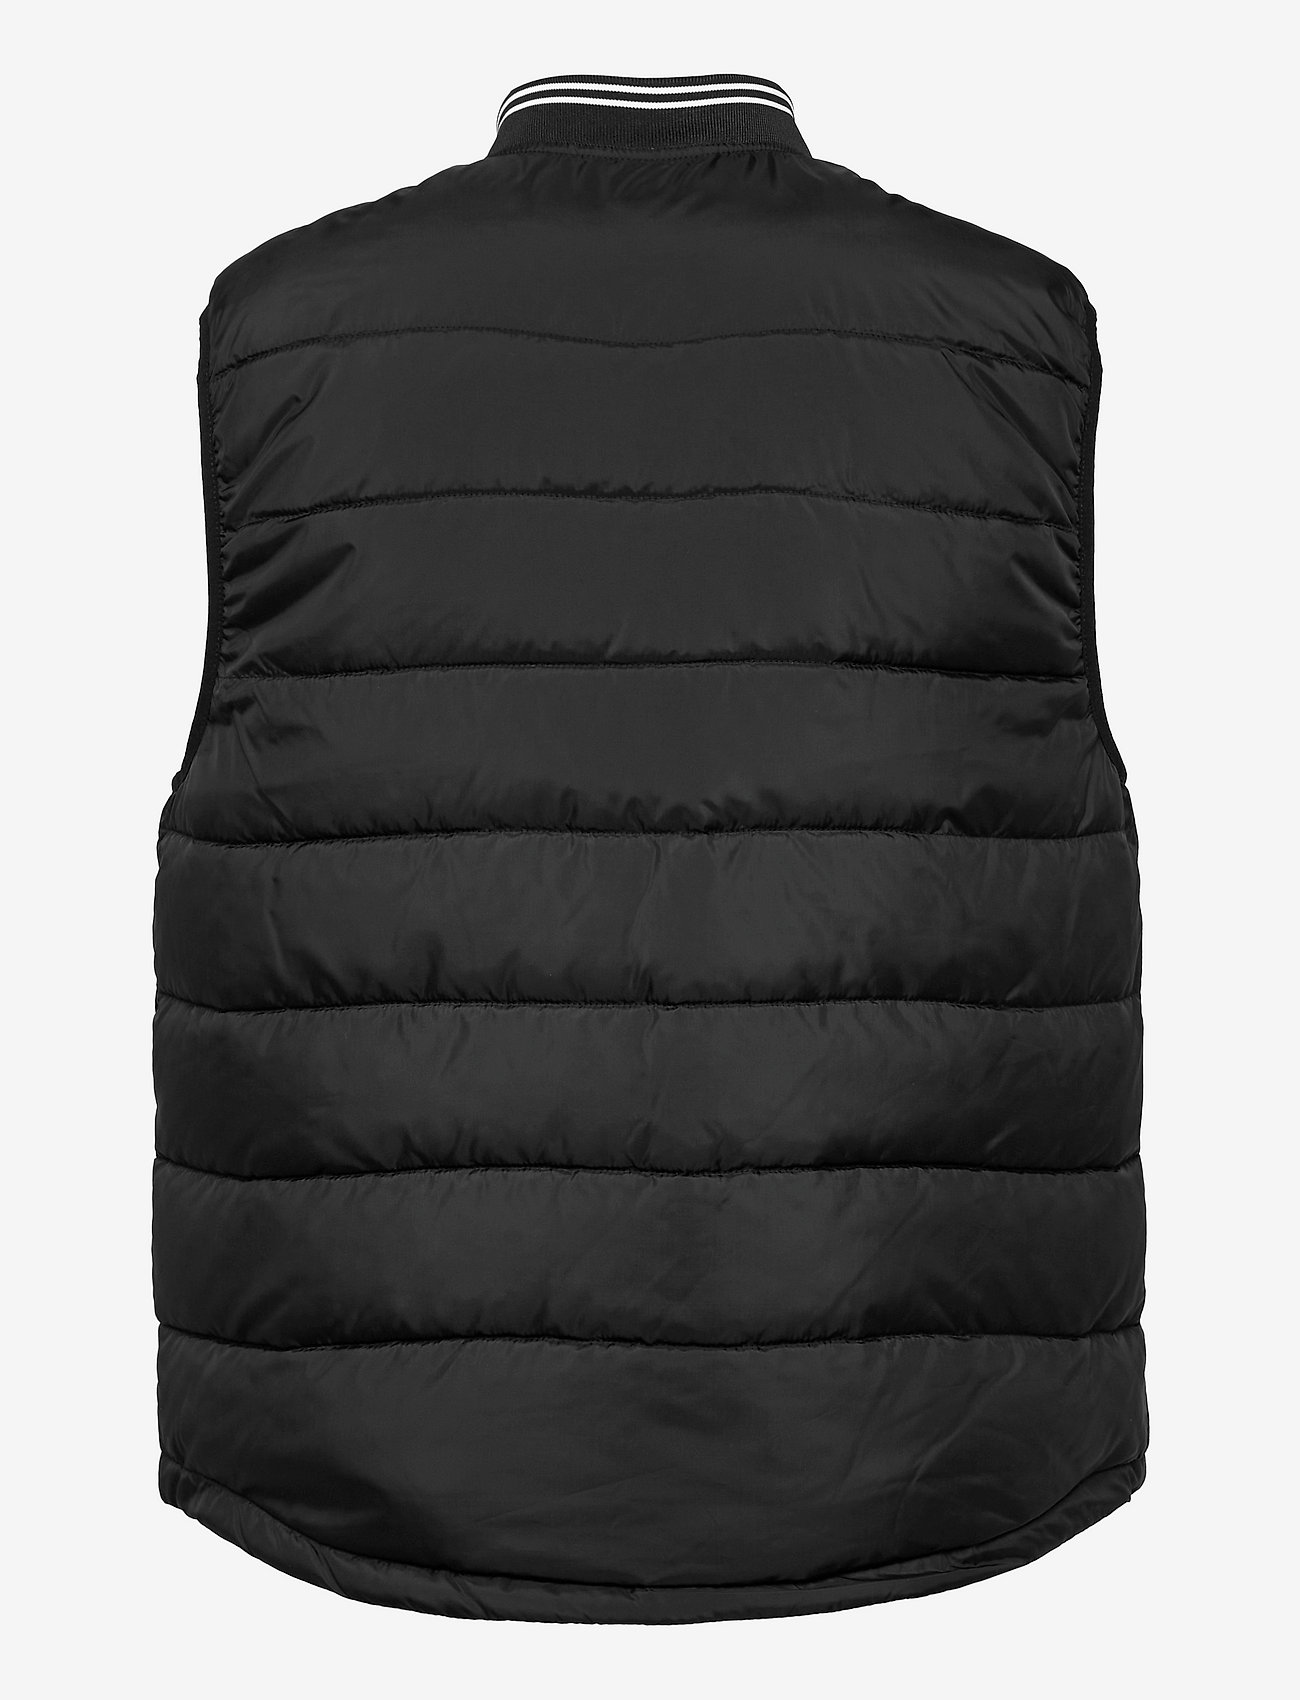 Original Penguin - PUFFER STYLE GILET - spring jackets - true black - 1